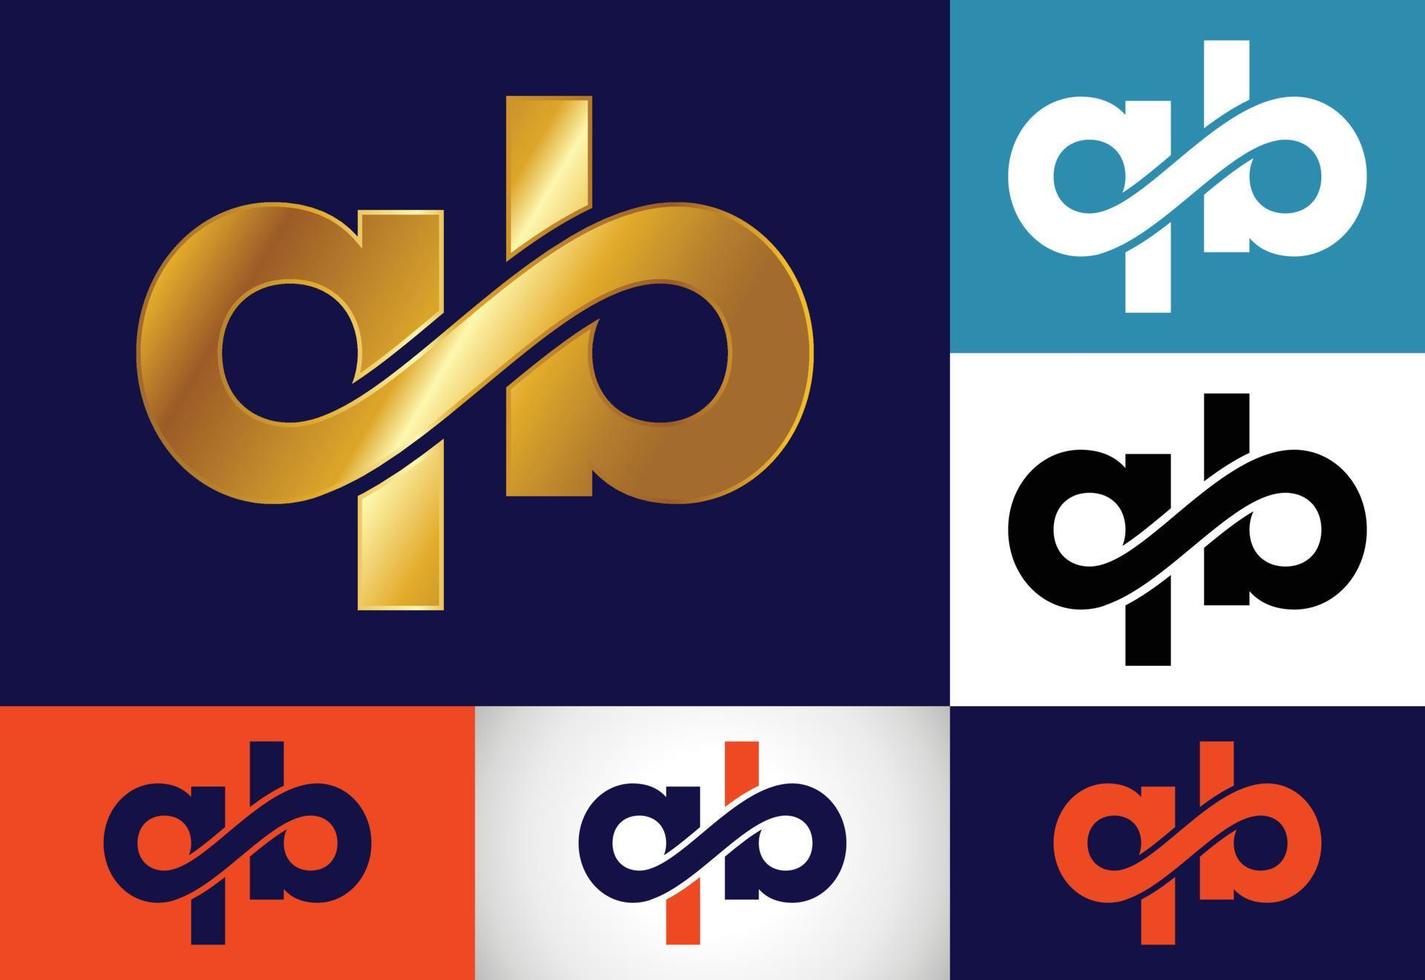 första monogram bokstaven qb logotyp design vektor mall. qb bokstavslogotypdesign